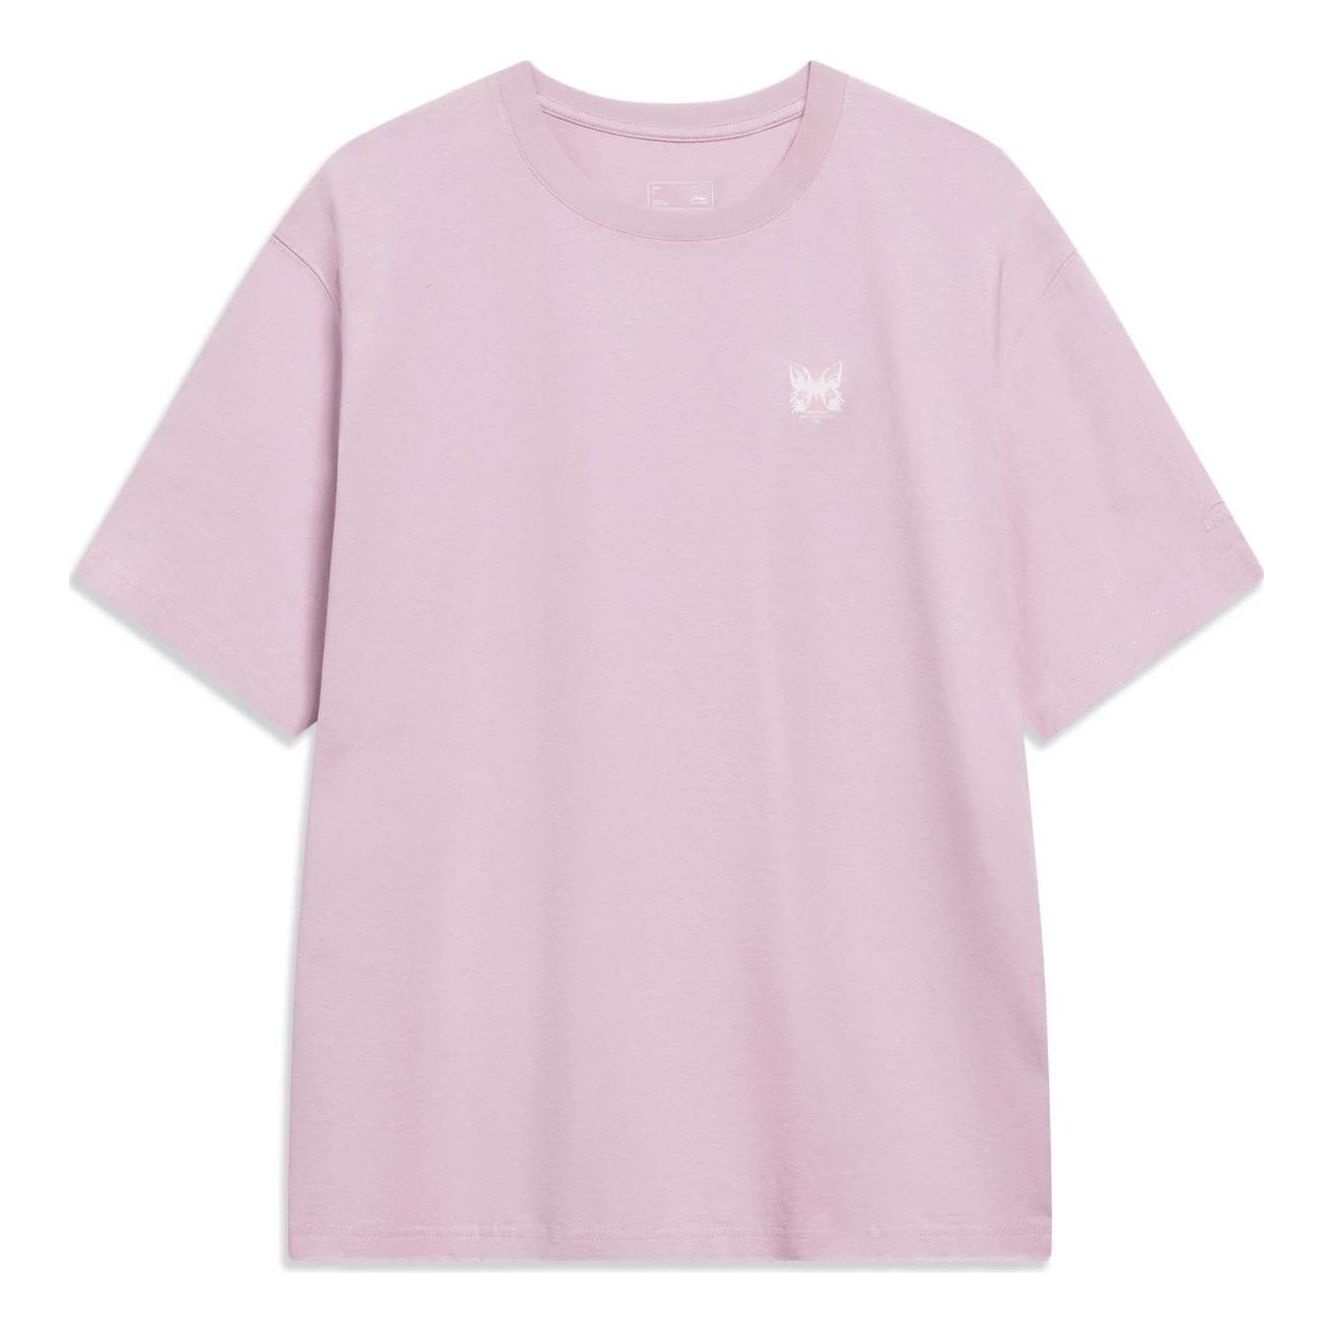 Li-Ning Butterfly Graphic T-shirt 'Pink' AHST205-5 - 1